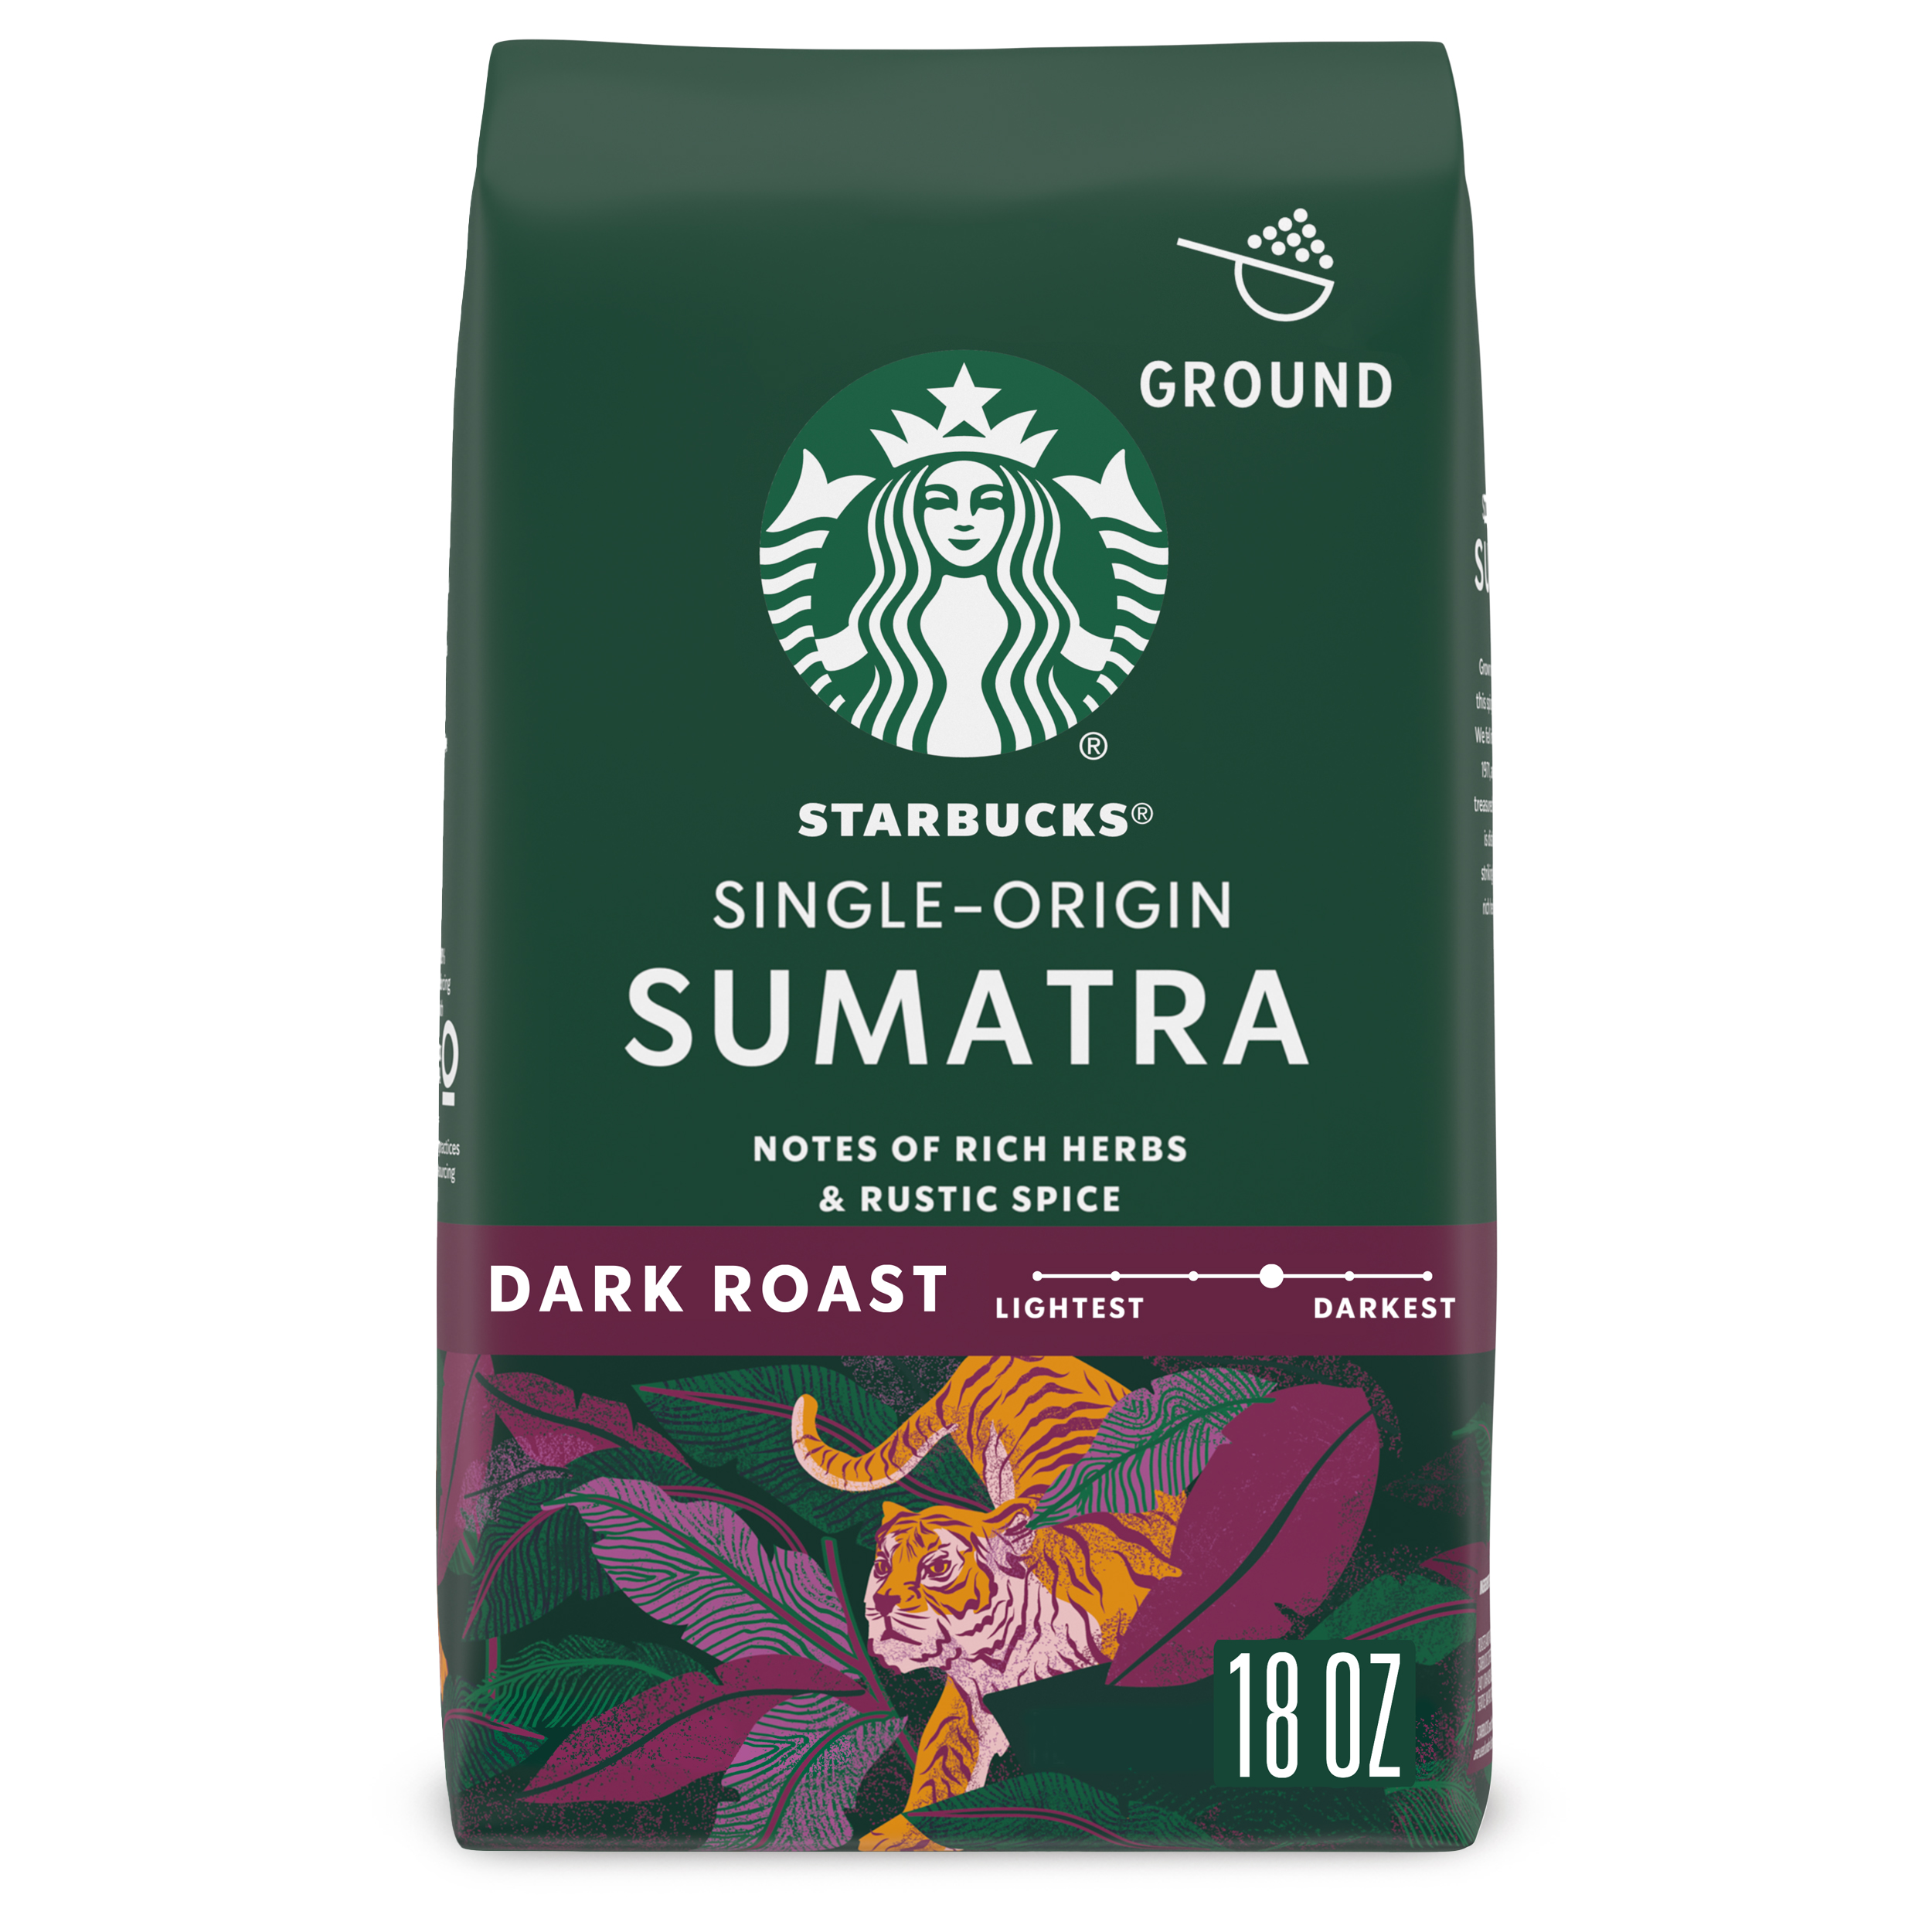 Starbucks Arabica Beans Sumatra, Dark Roast, Ground Coffee, 18 oz - image 1 of 8